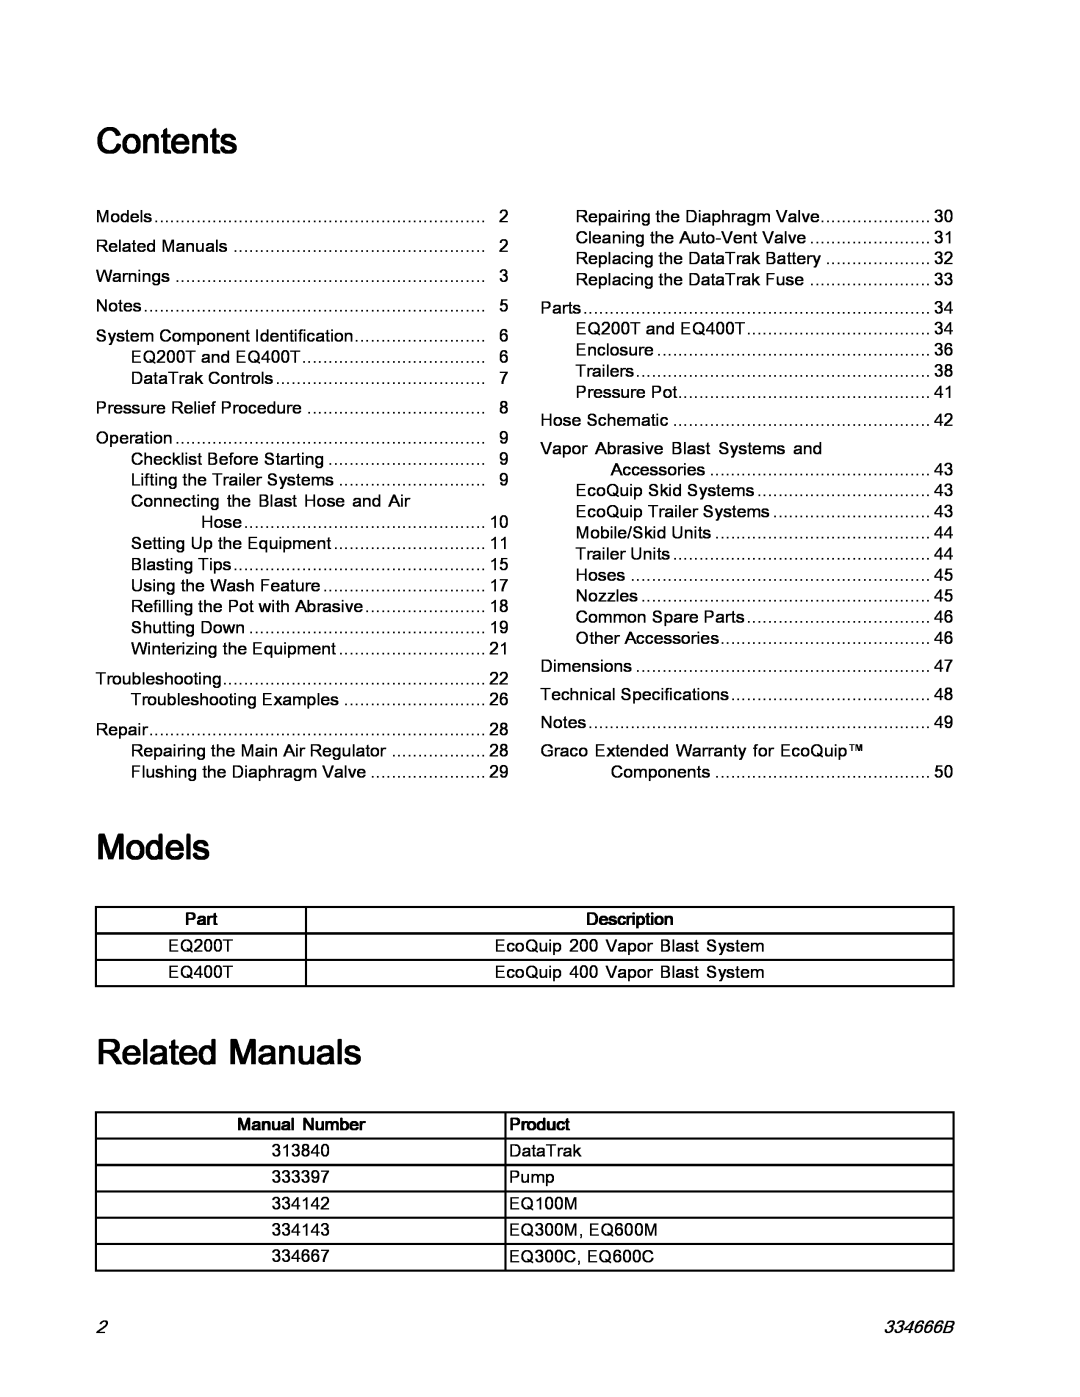 Graco ti25442a manual Contents, Models, Related Manuals, Part, Description, Manual Number, Product, 334666B 